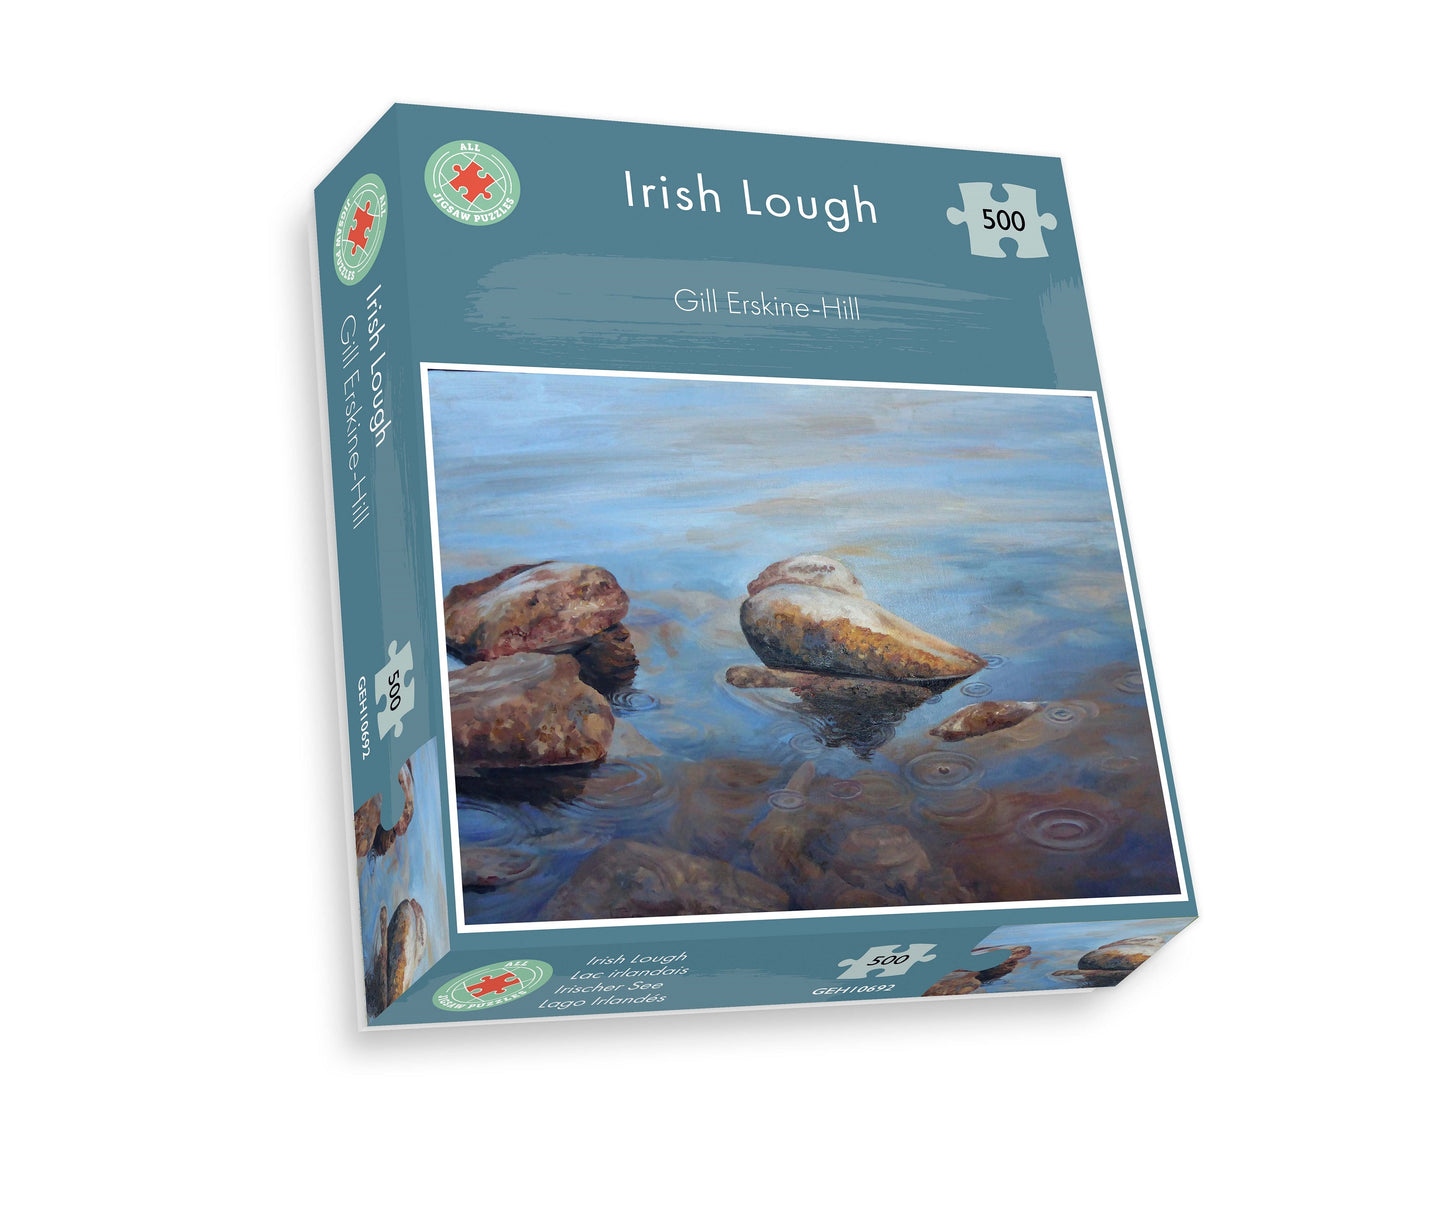 Irish Lough 500 piece Jigsaw Puzzle - Gill Erskine-Hill